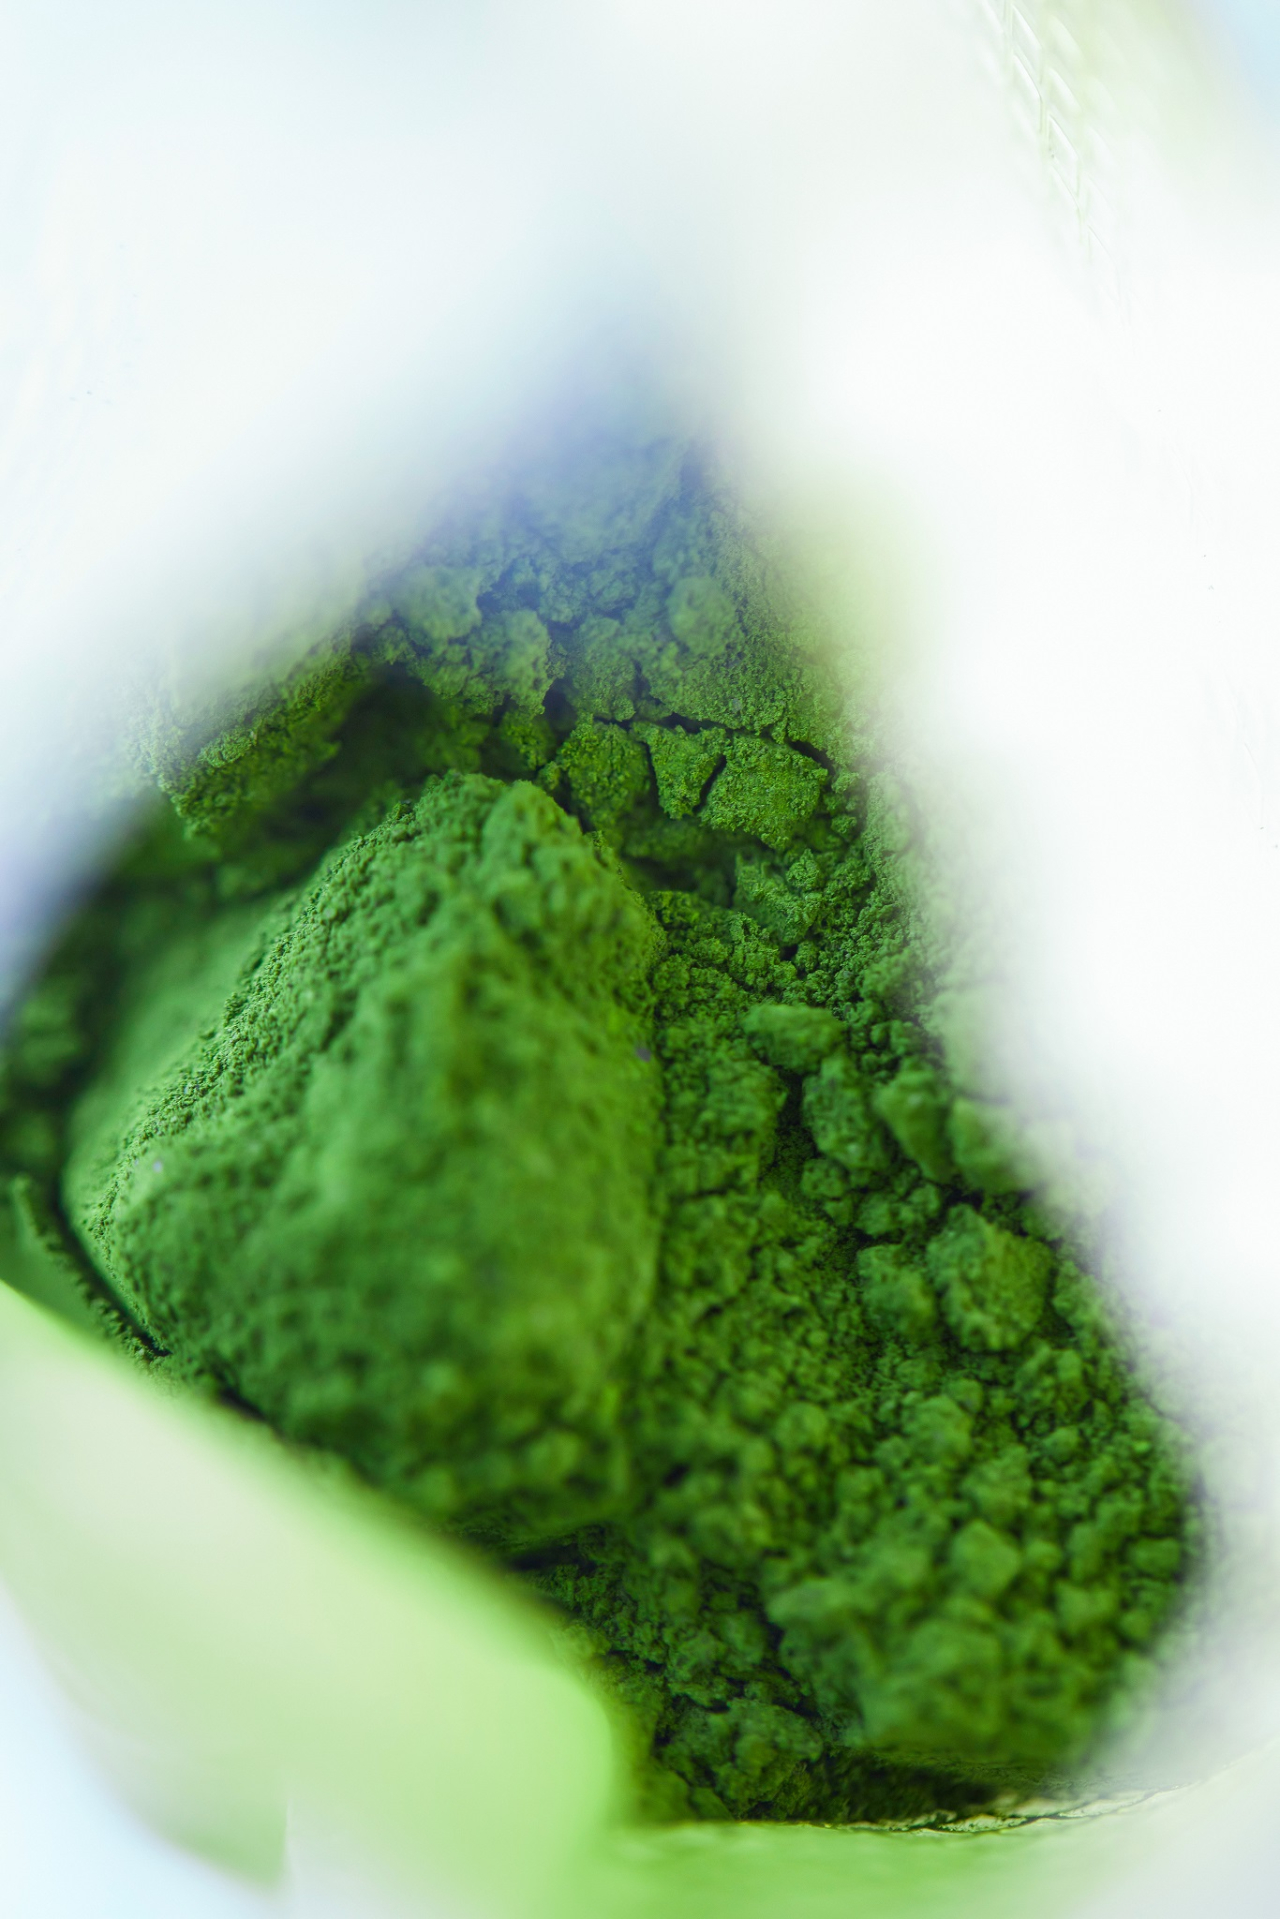 Each production line yields around 20 kilograms of dry algae powder per harvest.